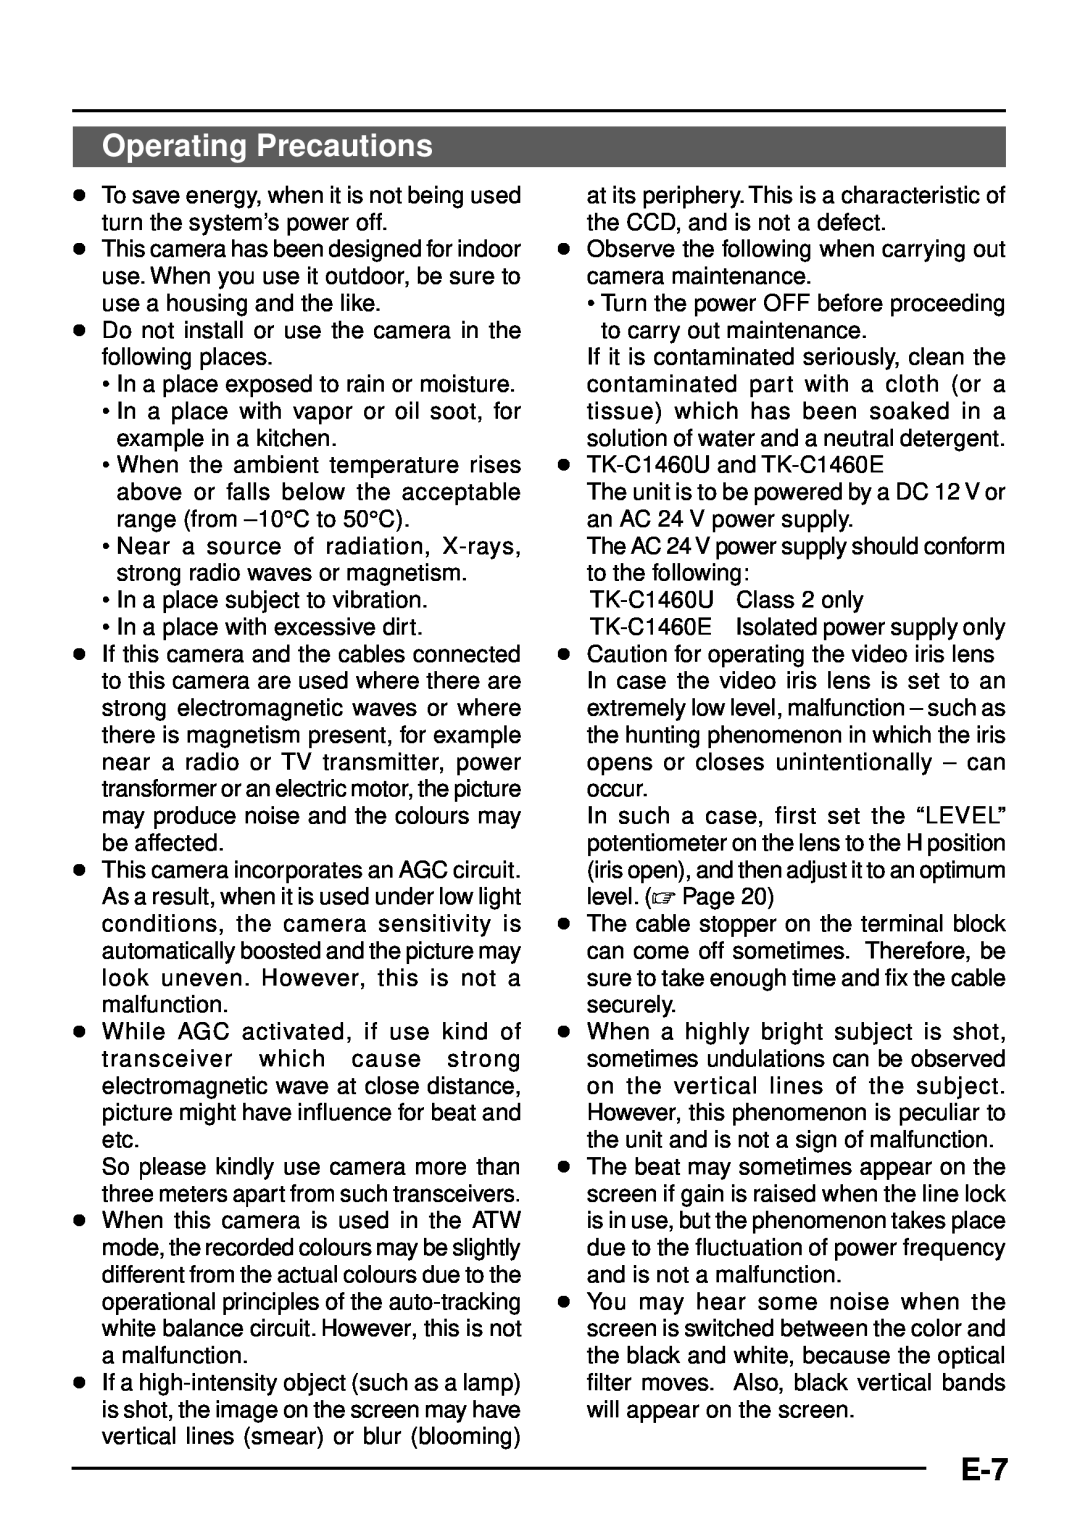 JVC TK-C1460 manual Operating Precautions 